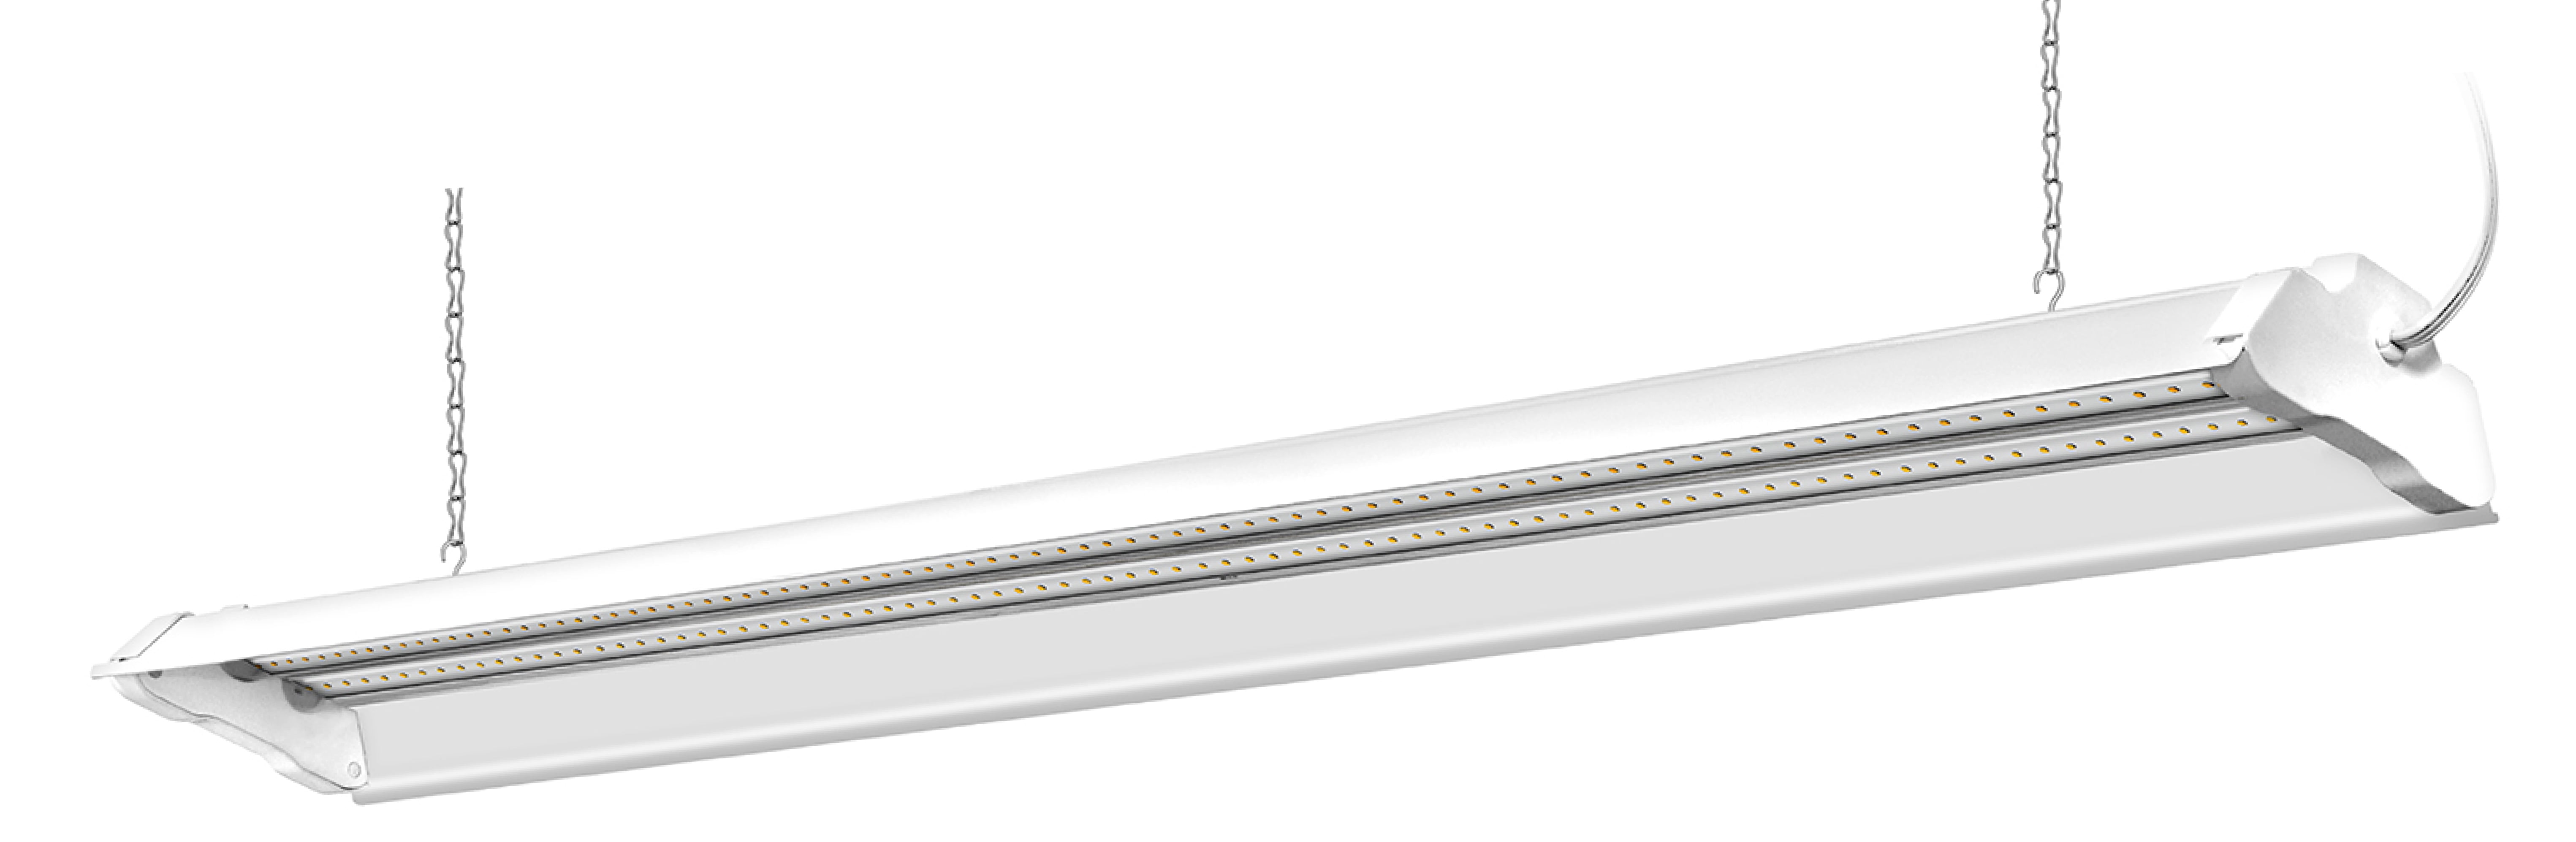 Hyper Tough 4ft LED Shop Light 3200 Lm, White